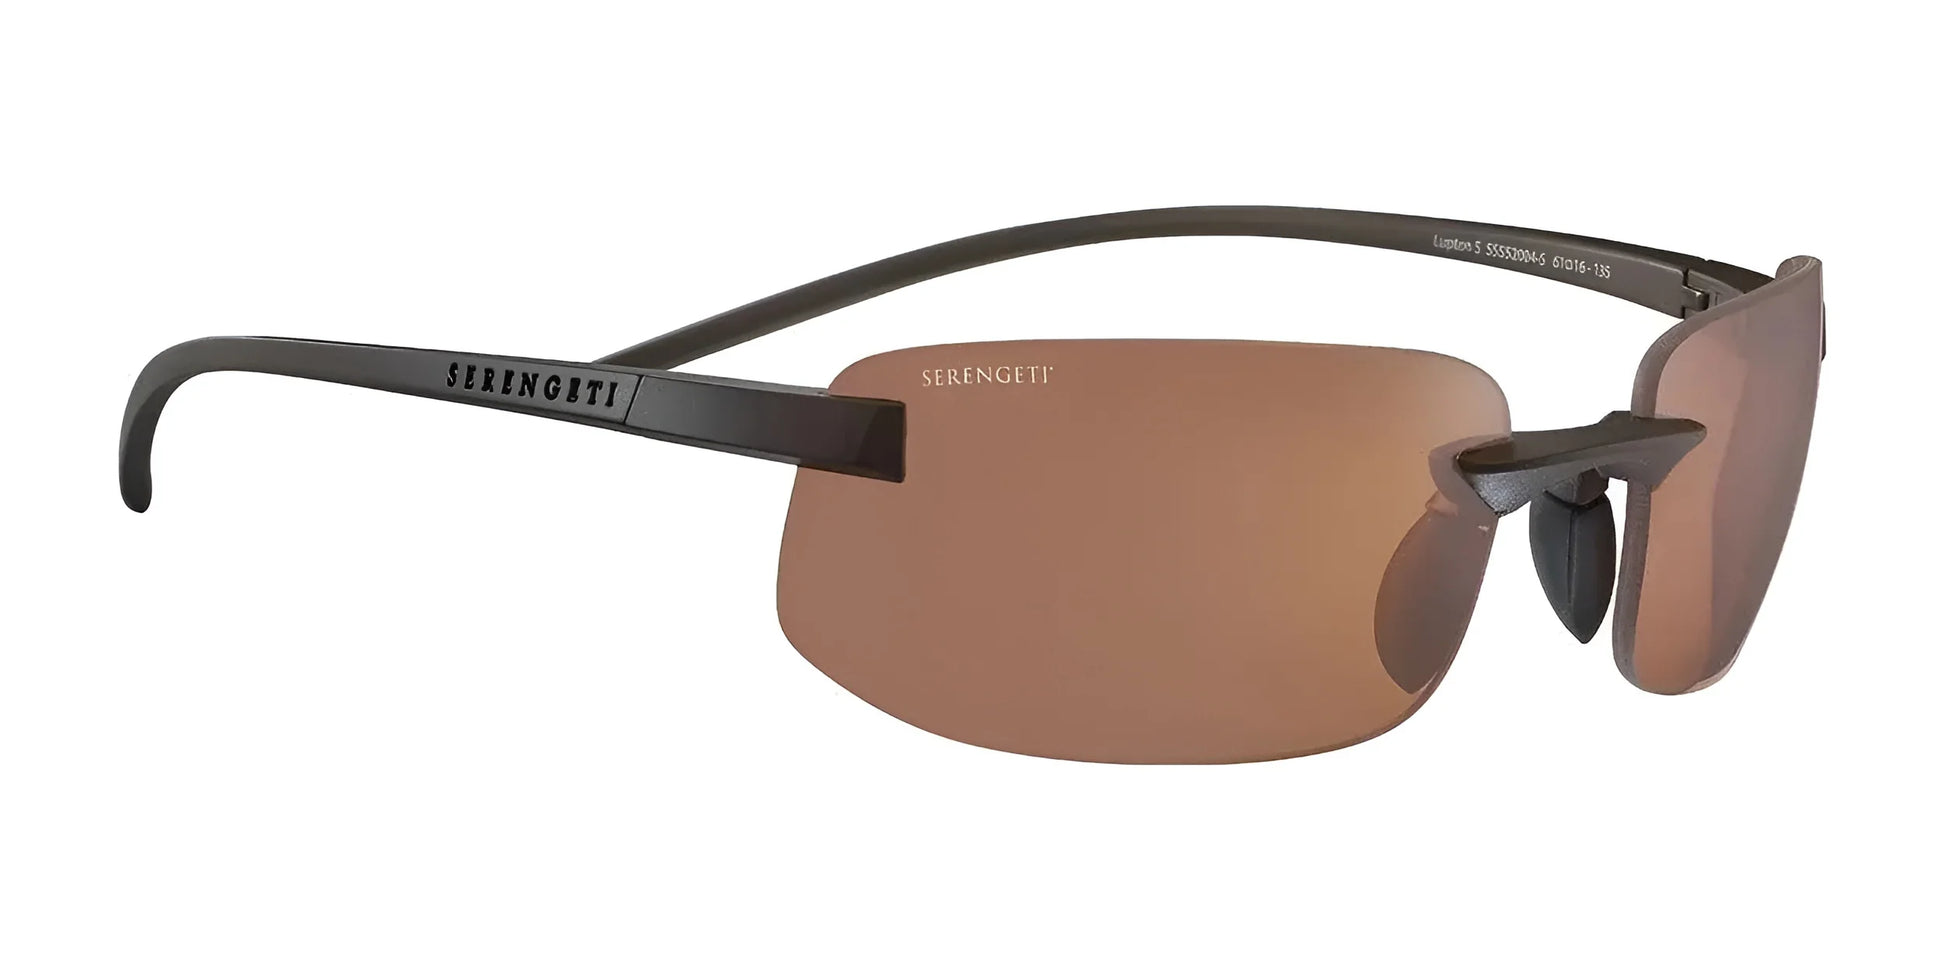 Serengeti Lupton Sunglasses Shiny Dark Brown / PhD 2.0 Polarized Drivers Cat 2 to 3